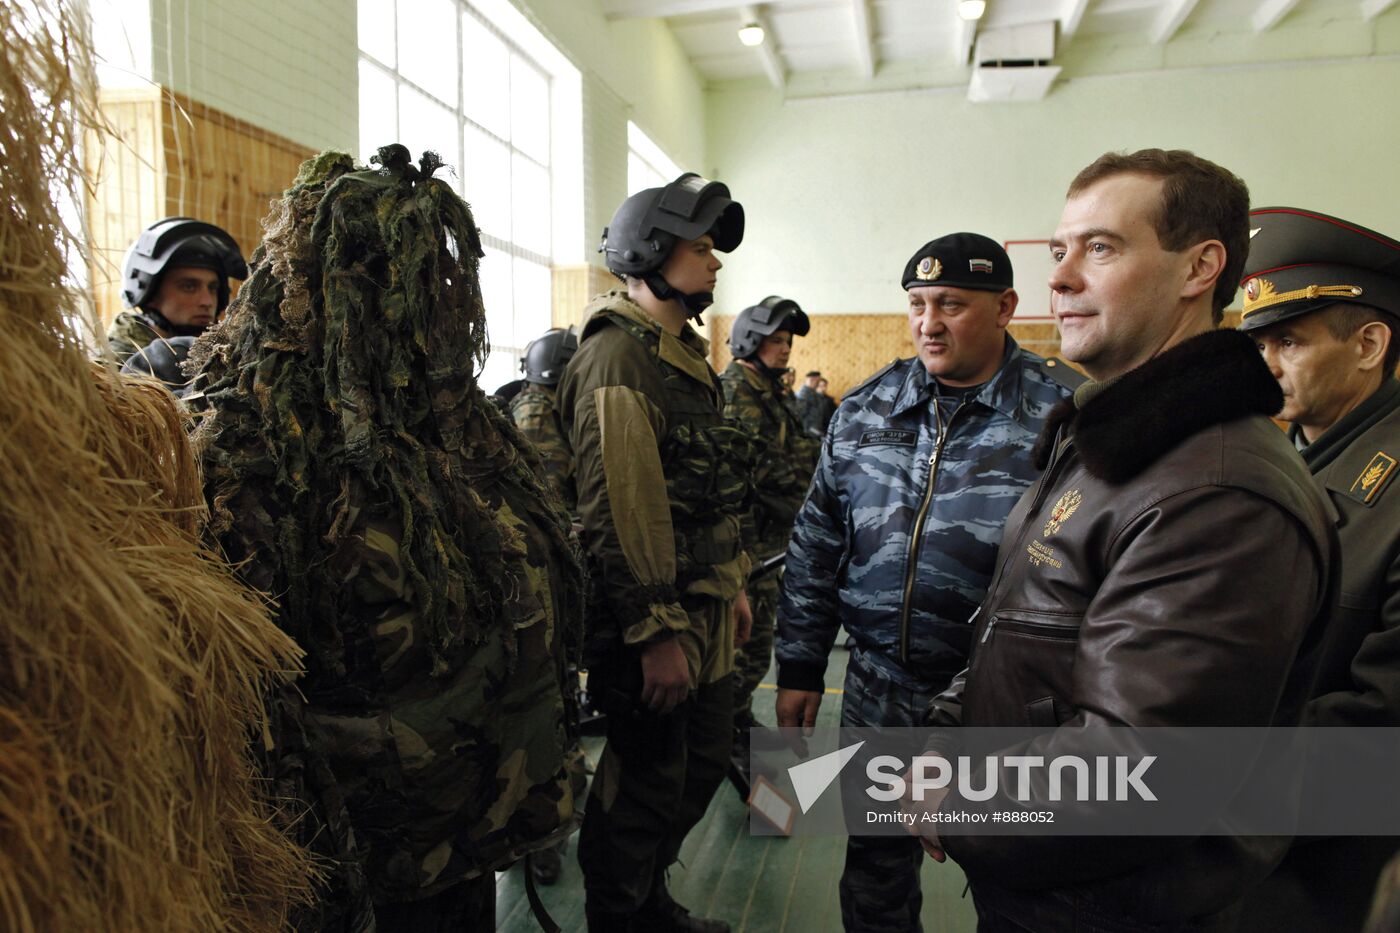 Dmitry Medvedev visits OMON police base "Bison" near Moscow